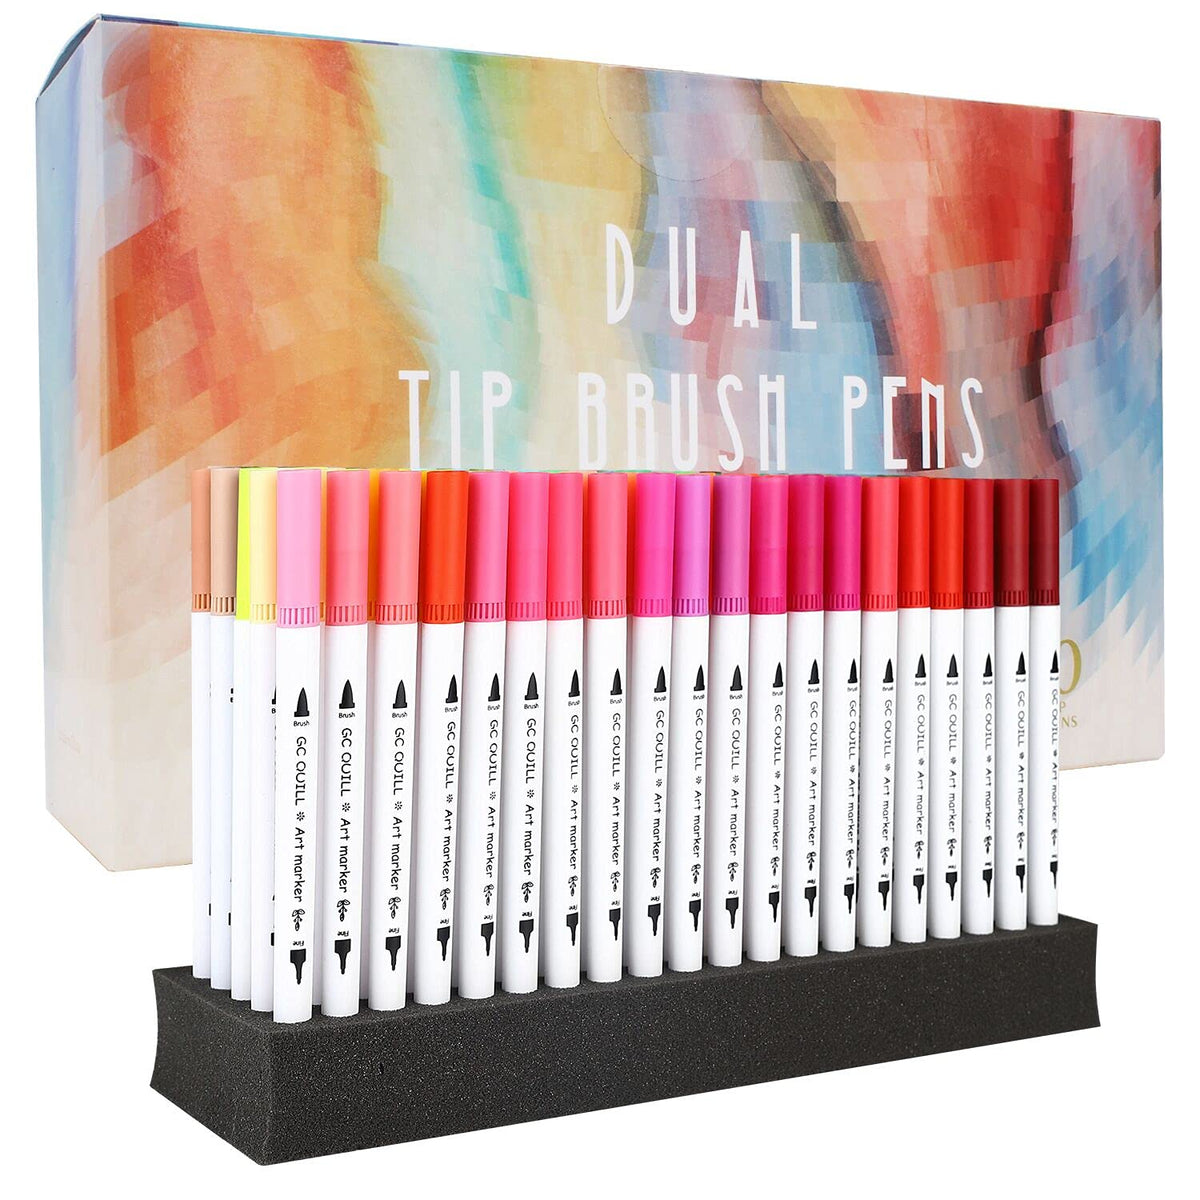 12PCS/Set Marker Pen Set Watercolor Pen Brush Markers Dual Tip Fineliner  Drawing for bullet Journal Art Markers Colors Pens